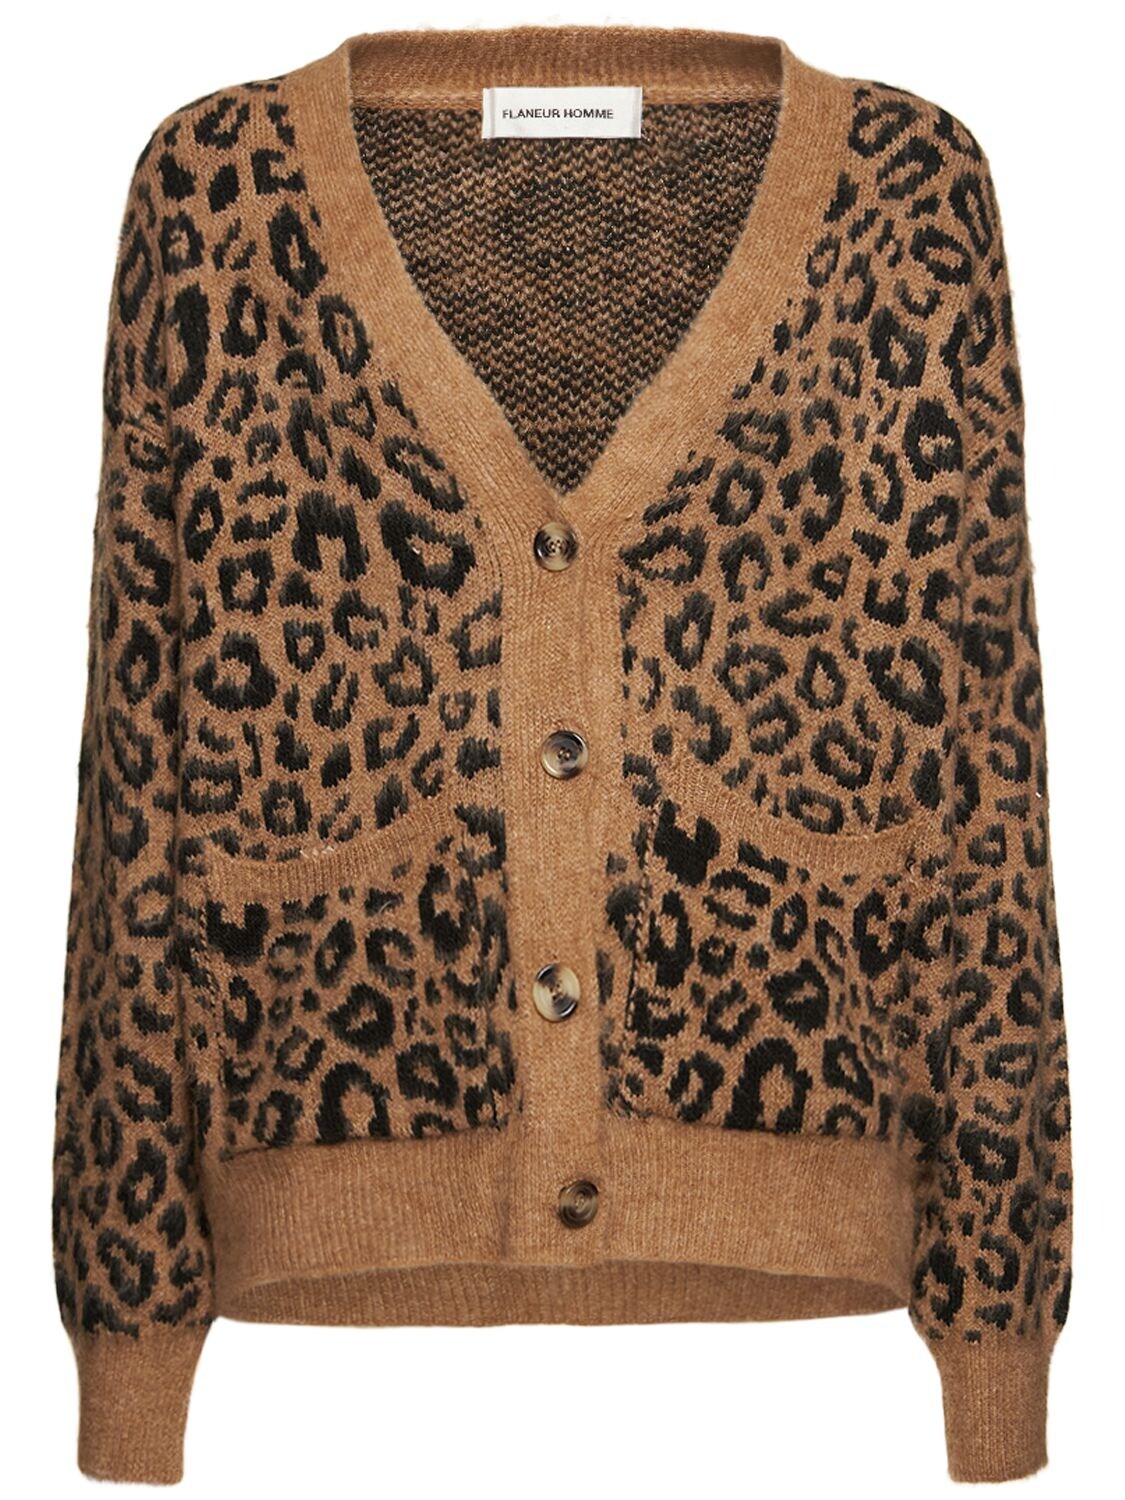 Flaneur Homme Cheetah Knit Cardigan In Brown